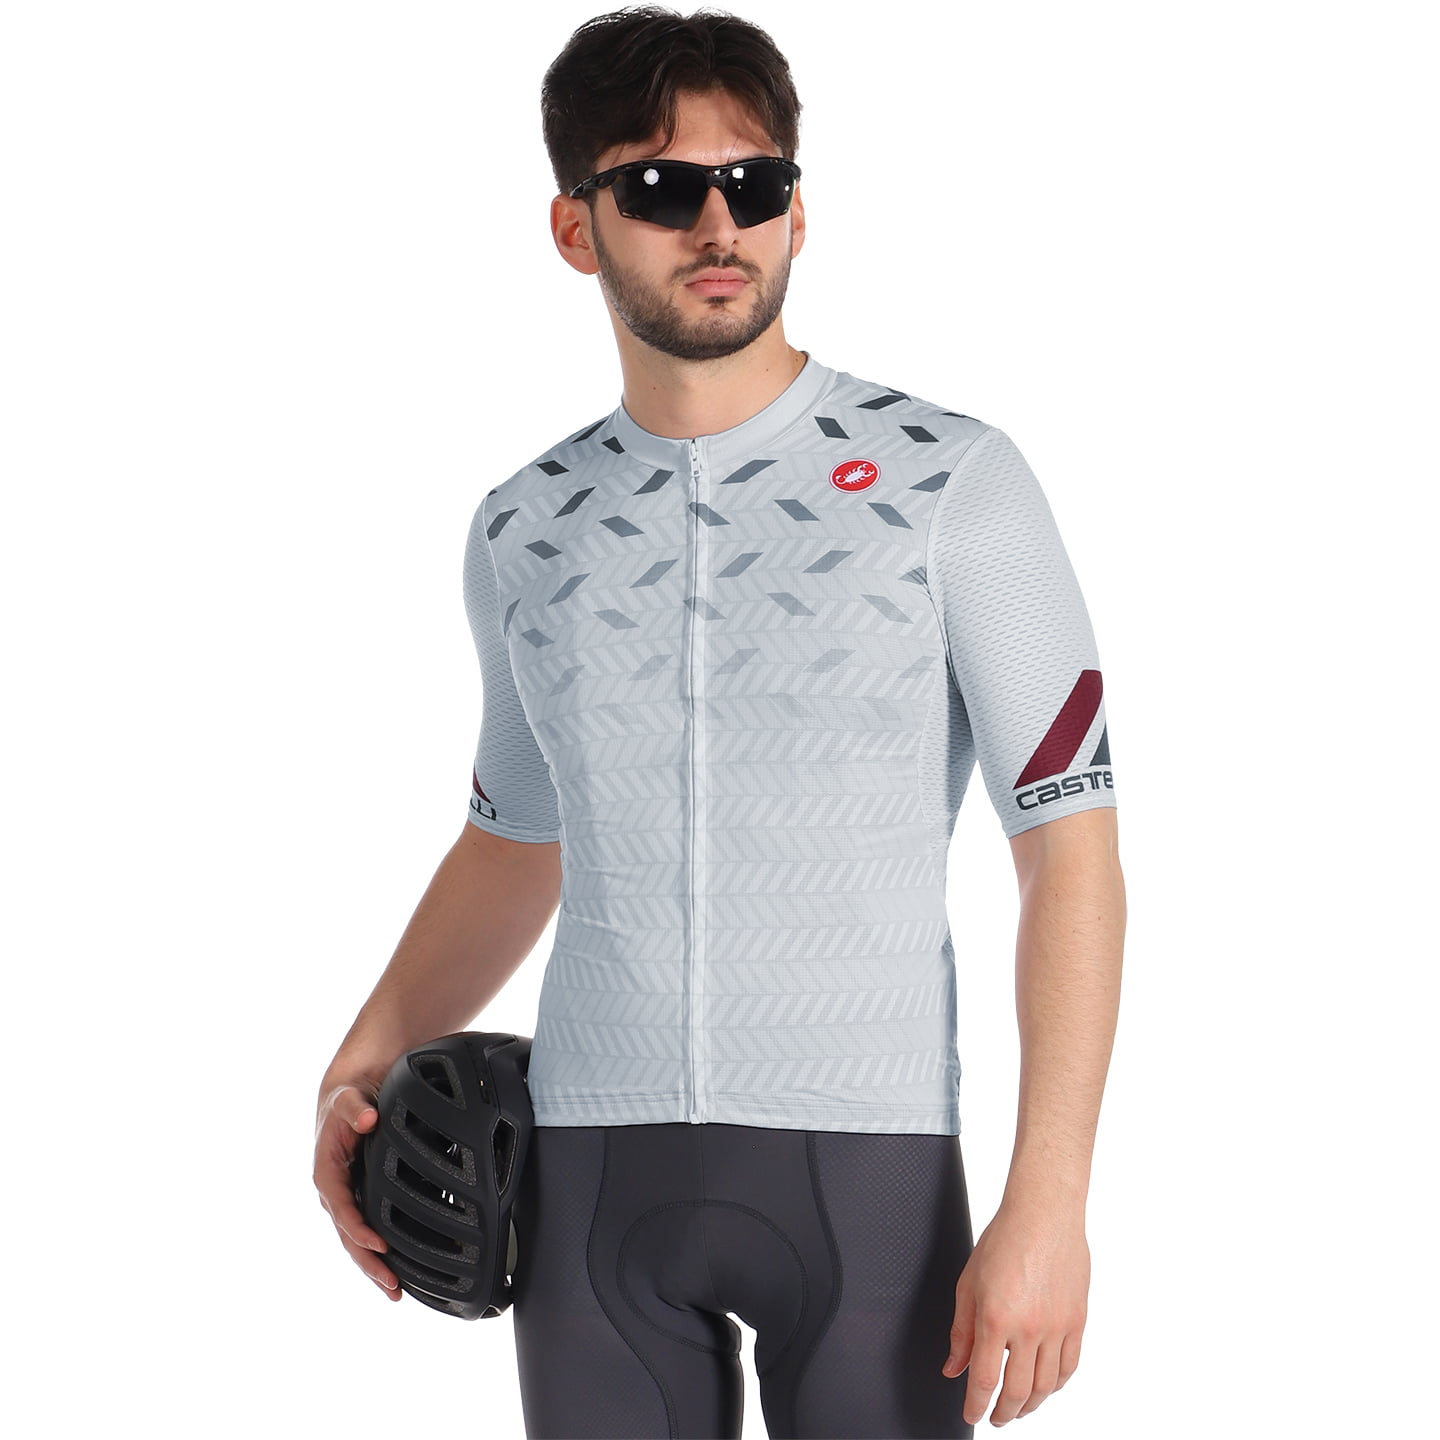 CASTELLI Avanti 2 Short Sleeve Jersey Short Sleeve Jersey, for men, size L, Cycling jersey, Cycling clothing